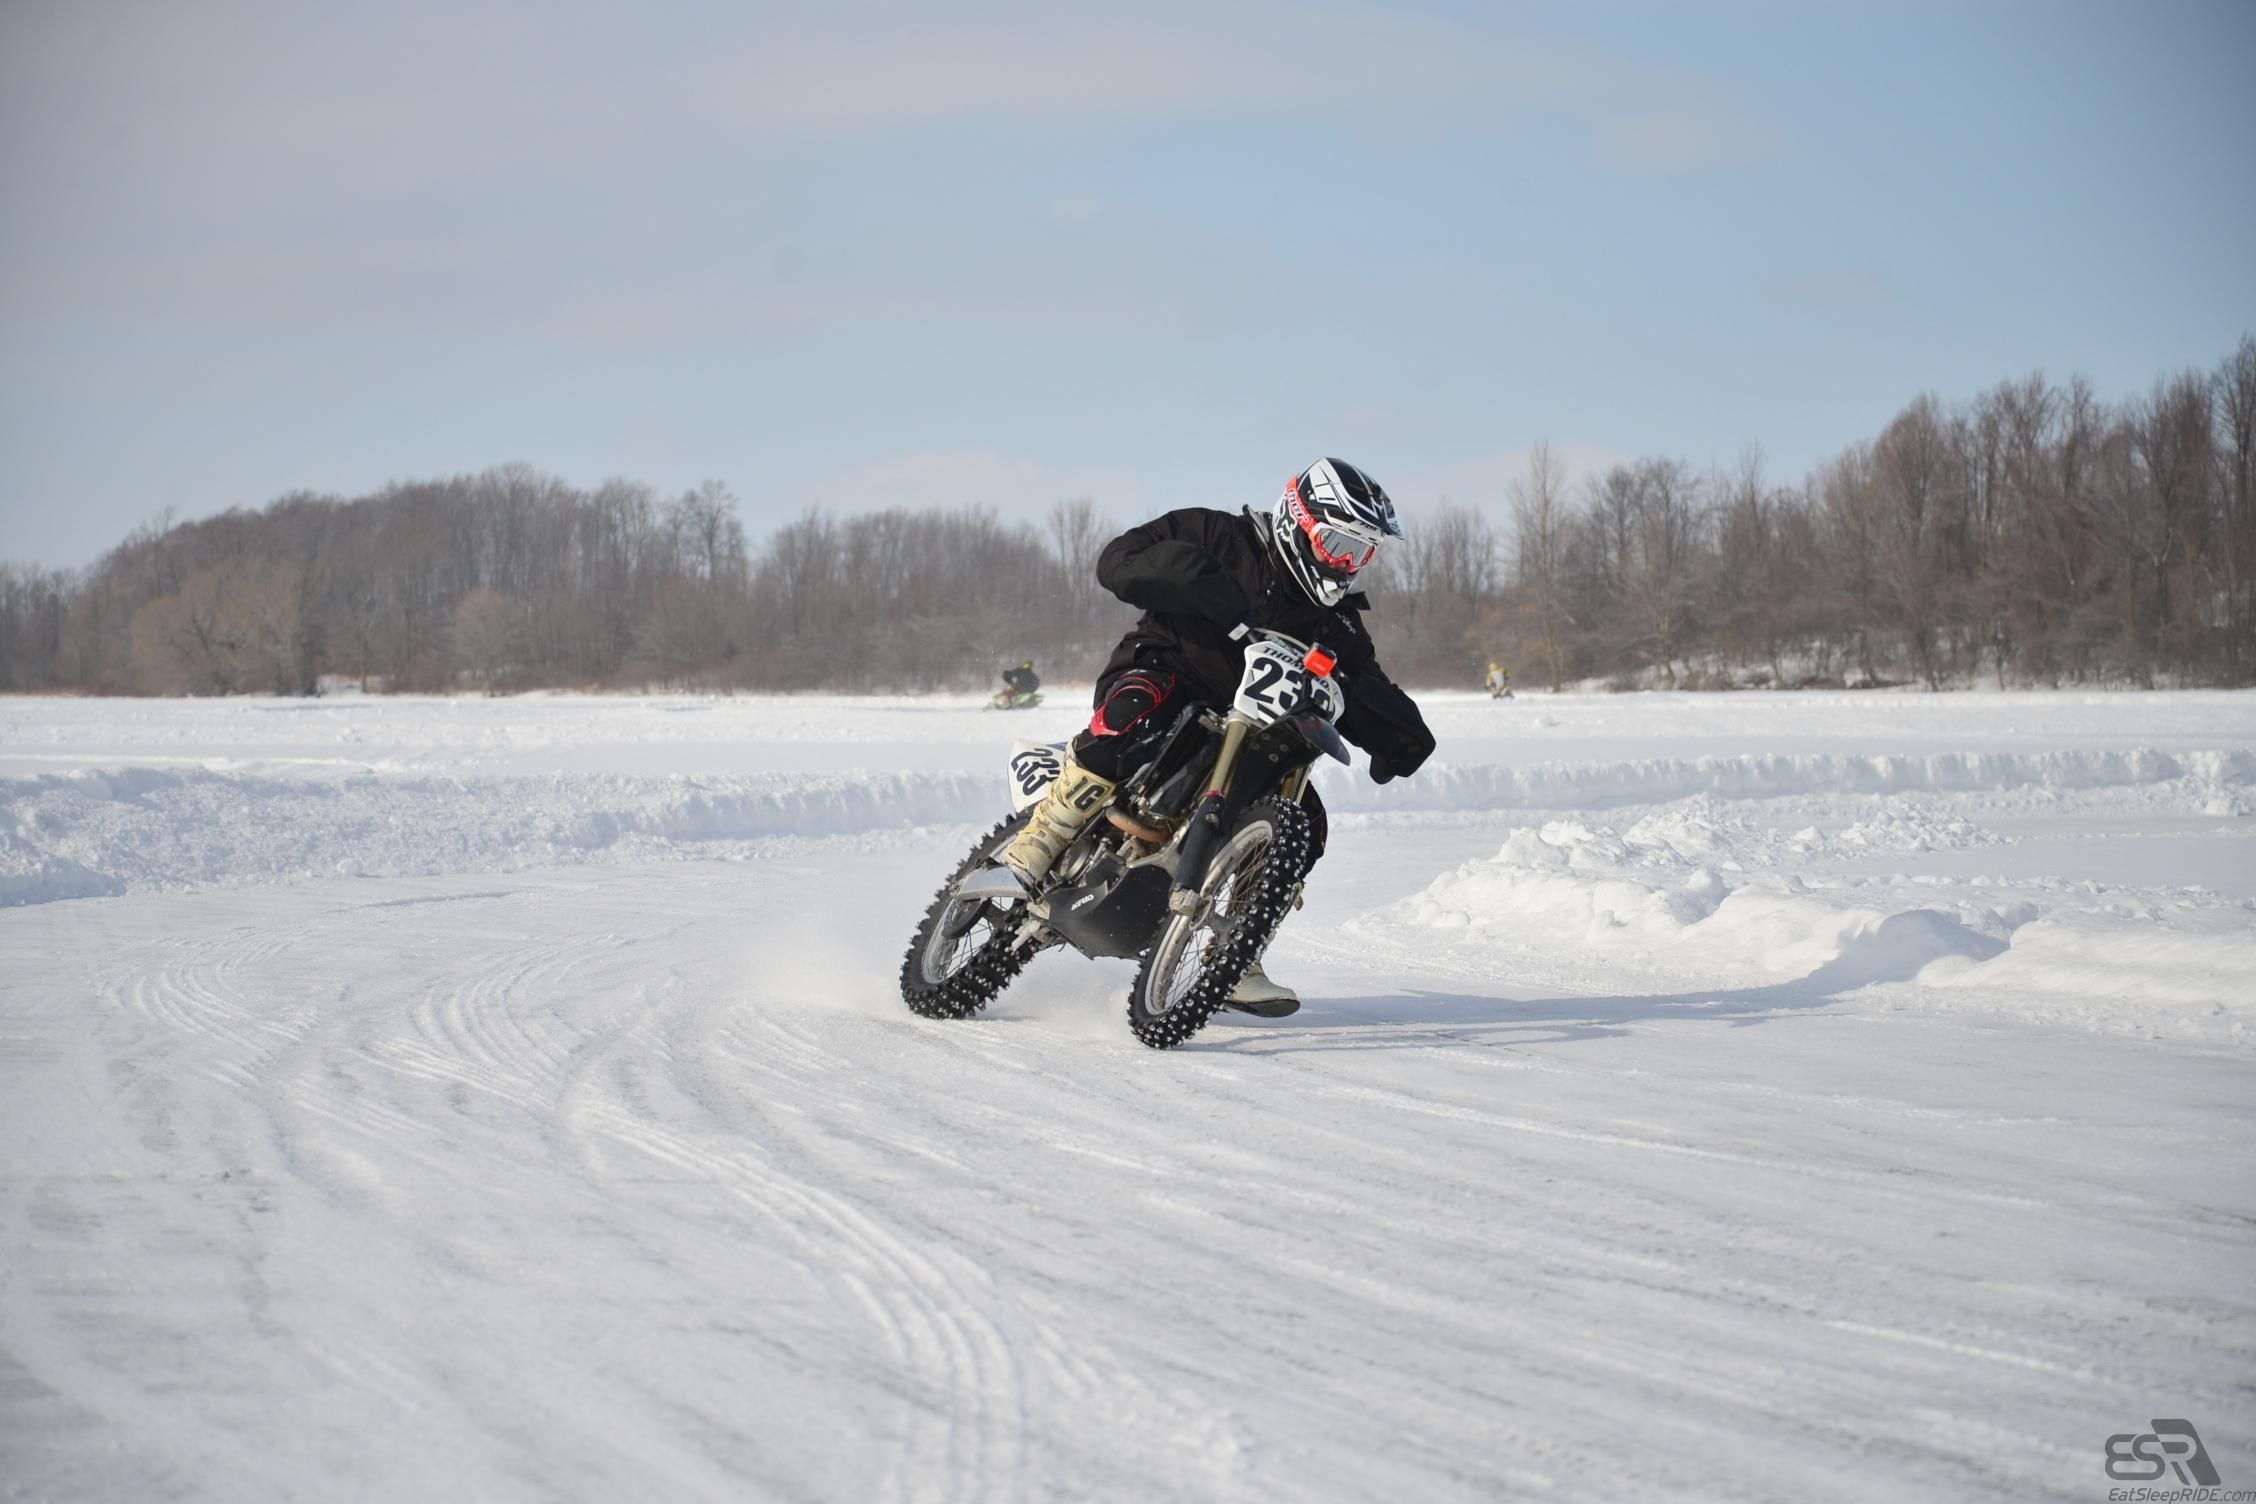 #233 taking a nice corner - Ice riding (1)